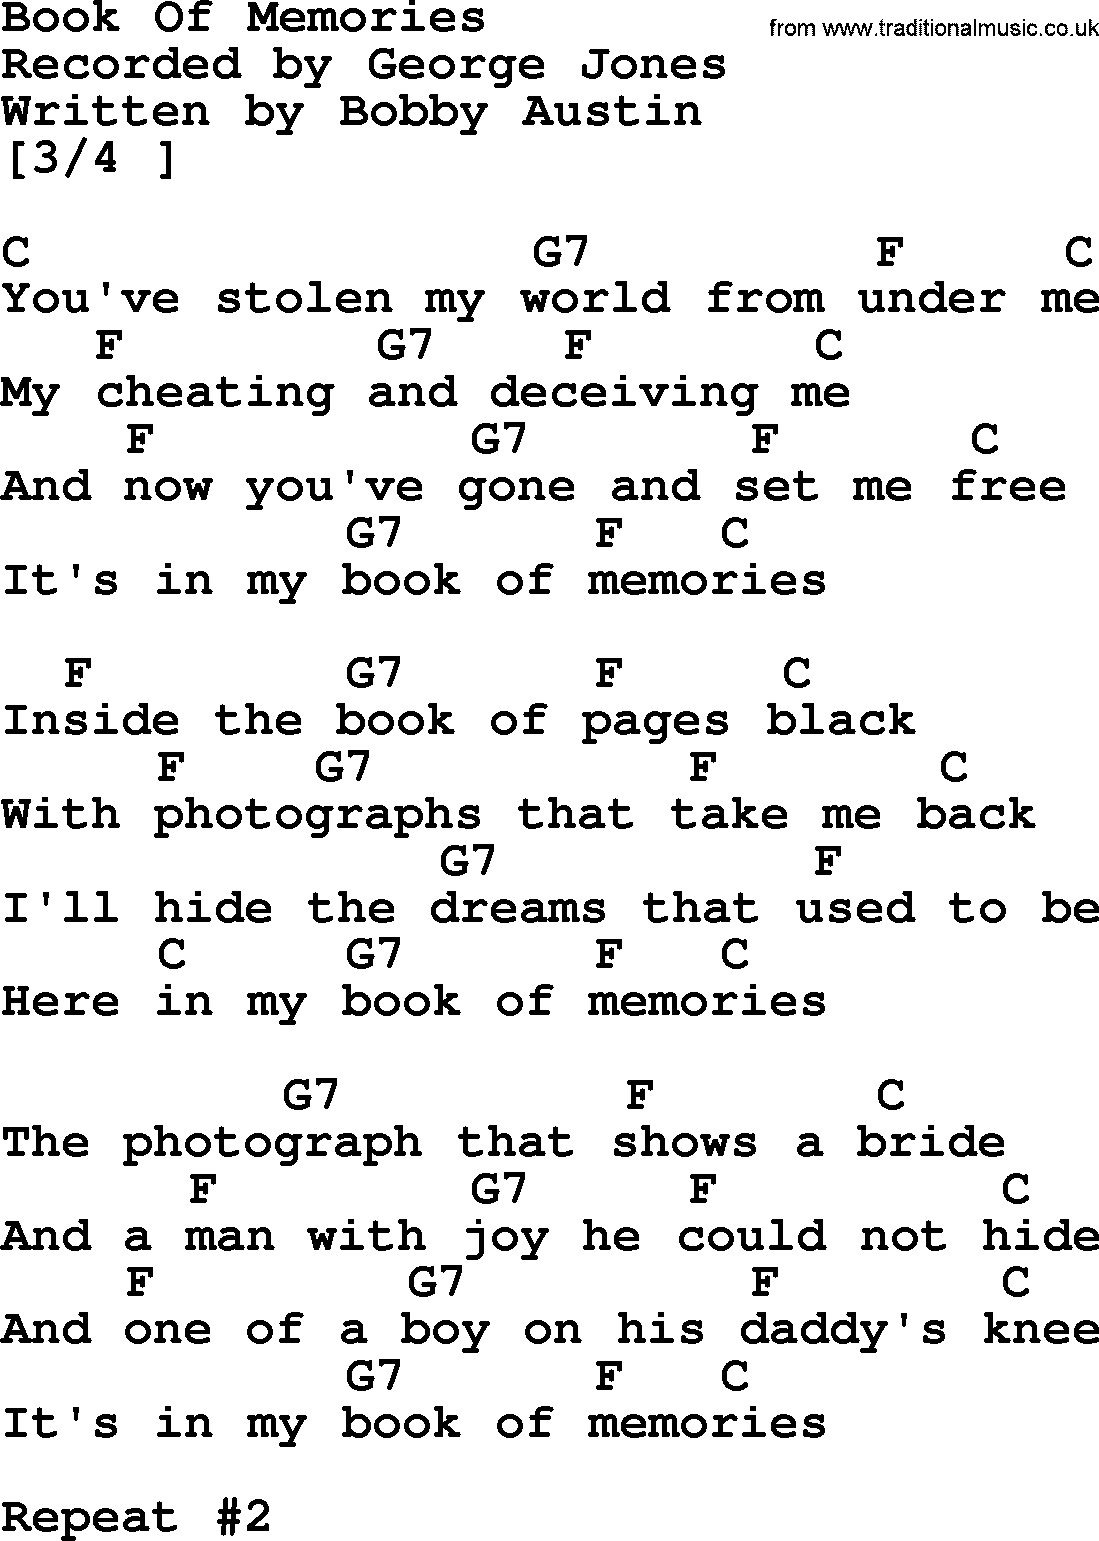 George Jones song: Book Of Memories, lyrics and chords